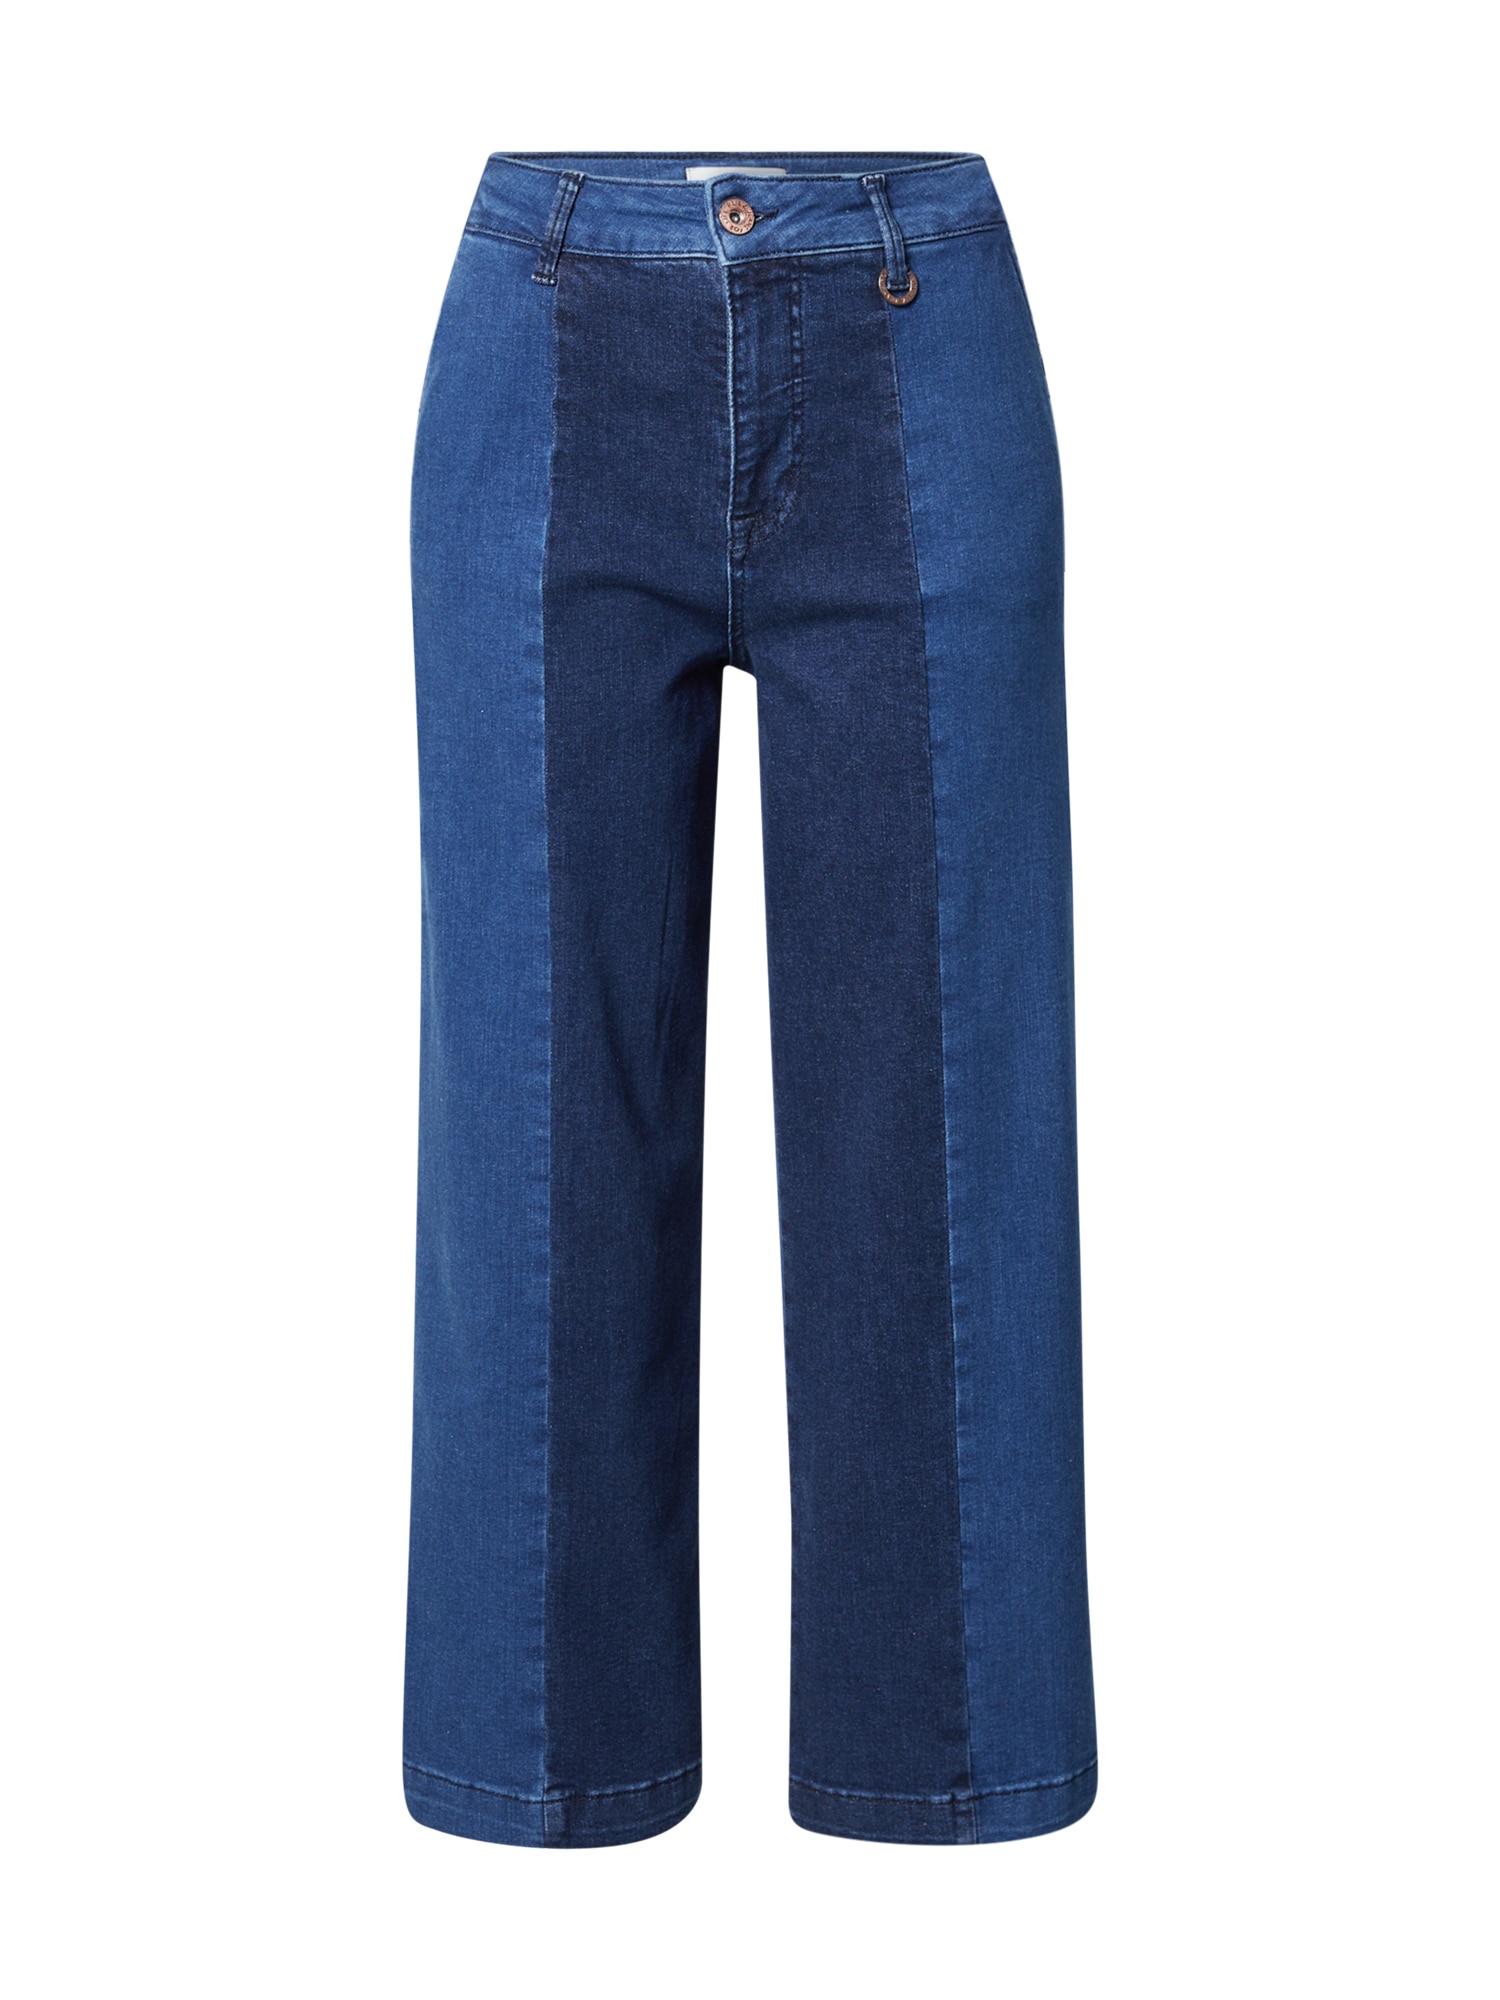 PULZ Jeans Džinsai tamsiai (džinso) mėlyna / tamsiai mėlyna